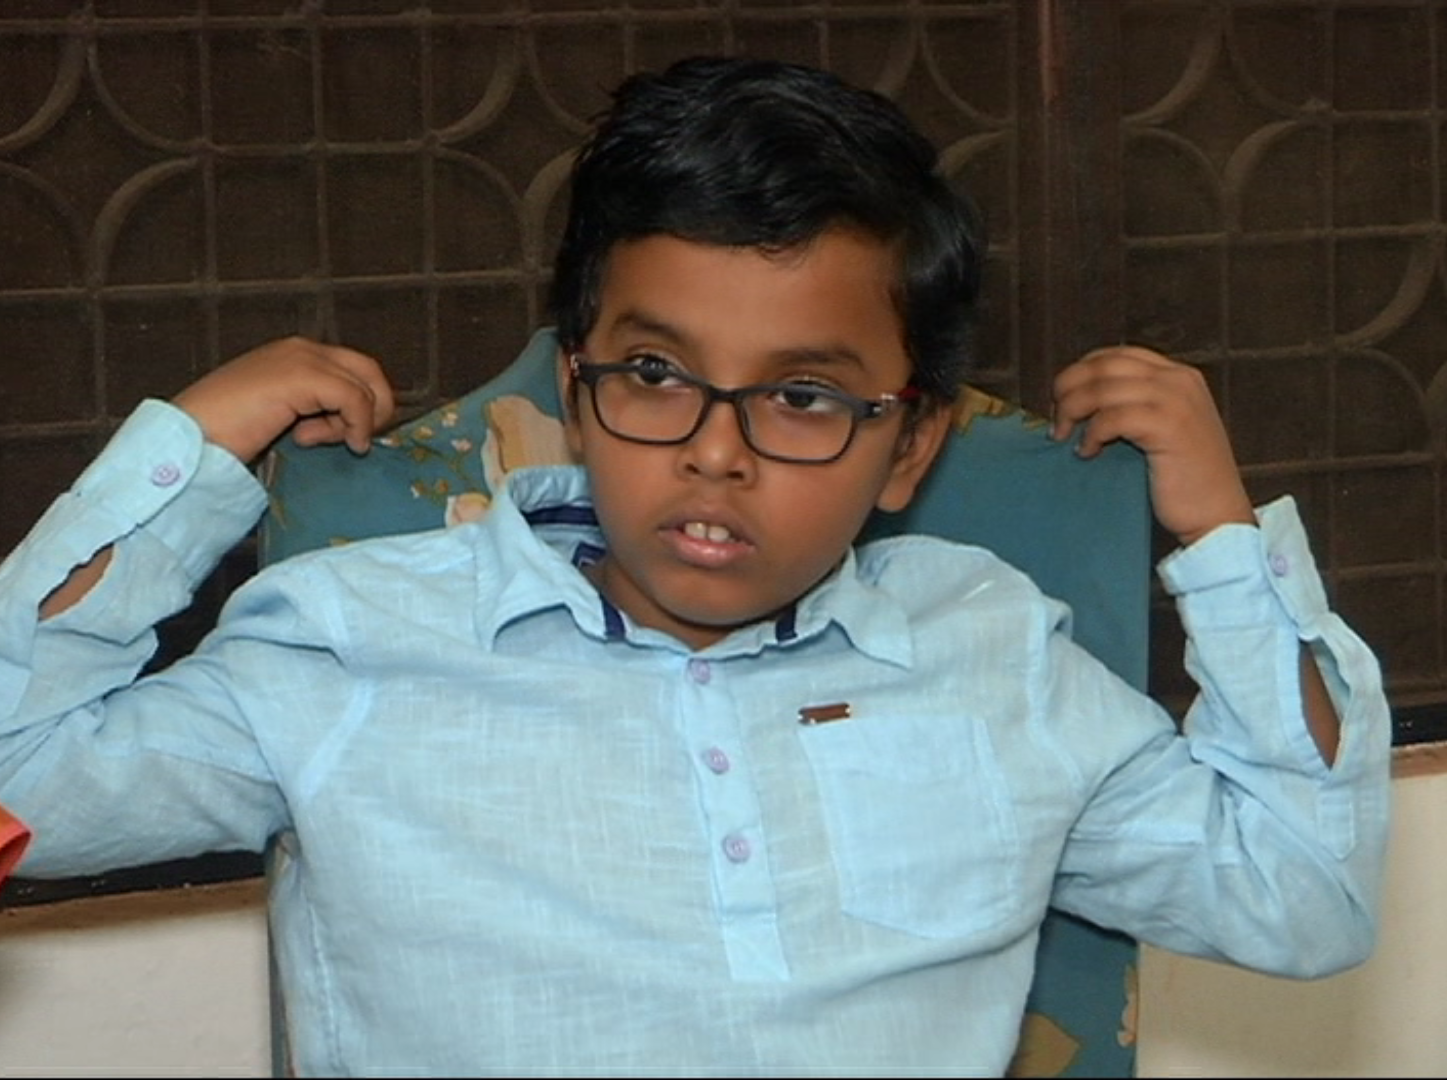 Worlds Geography In 8 Years Old Odia Boy Pratyus Mind 